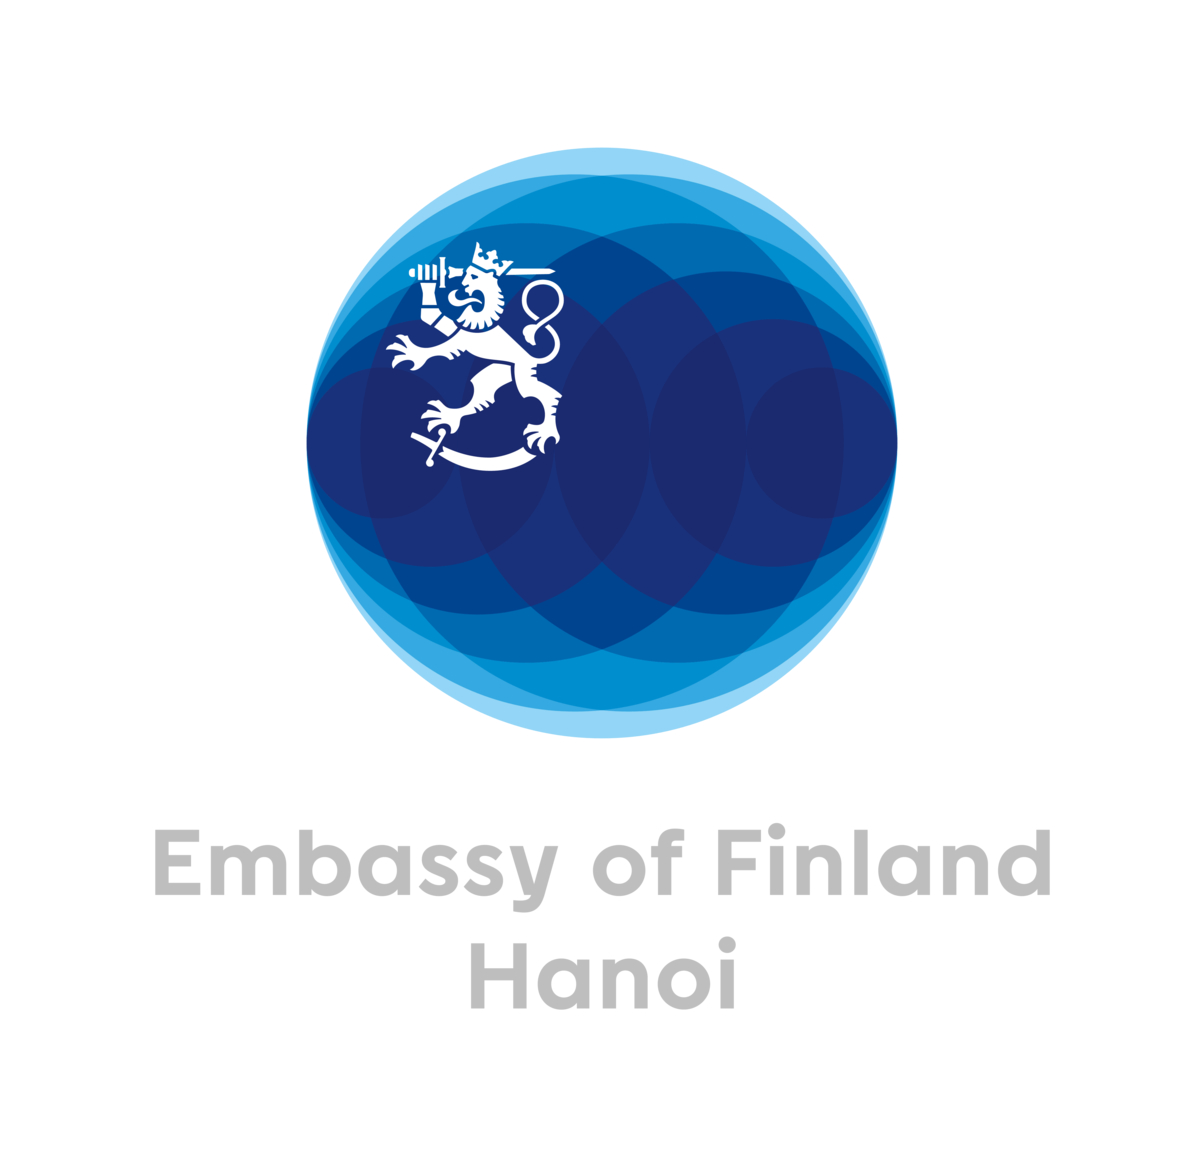 EMBASSY OF FINLAND IN HANOI